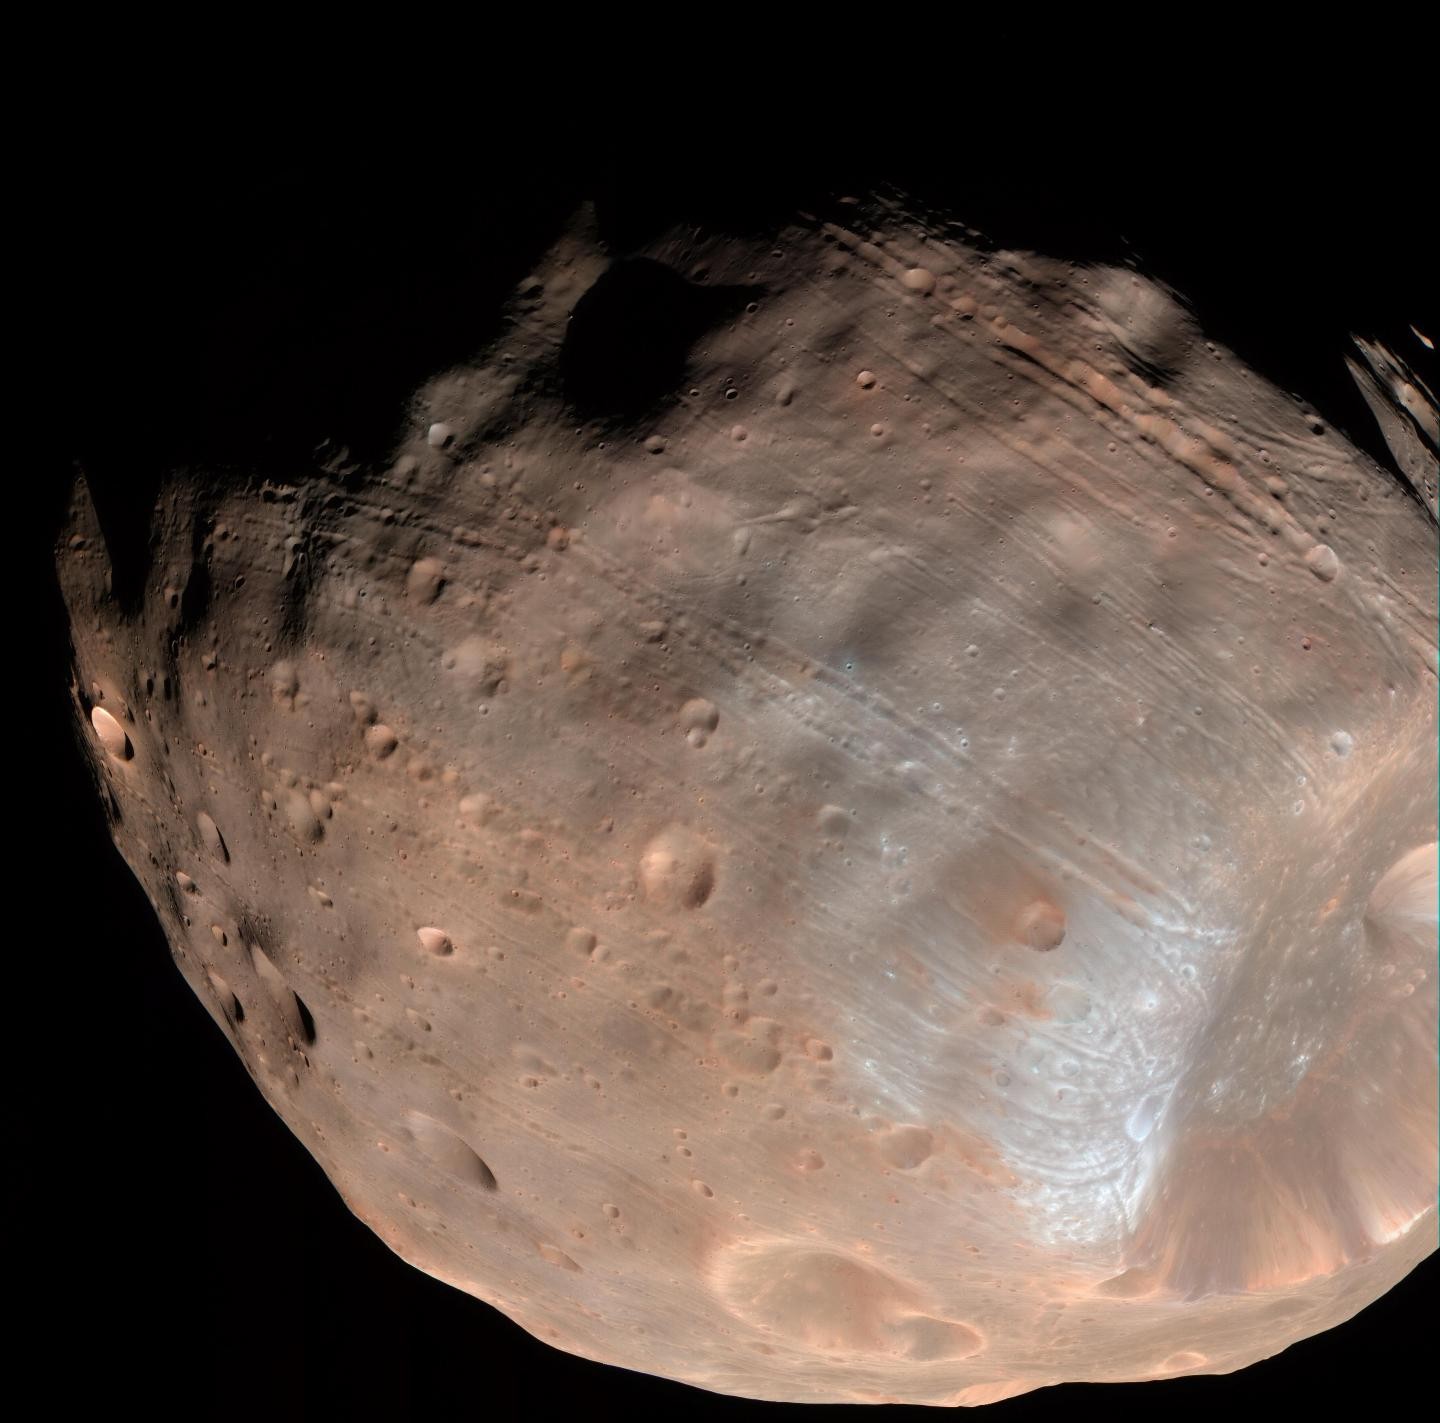 Martian moons Phobos and Deimos have a common ancestor 